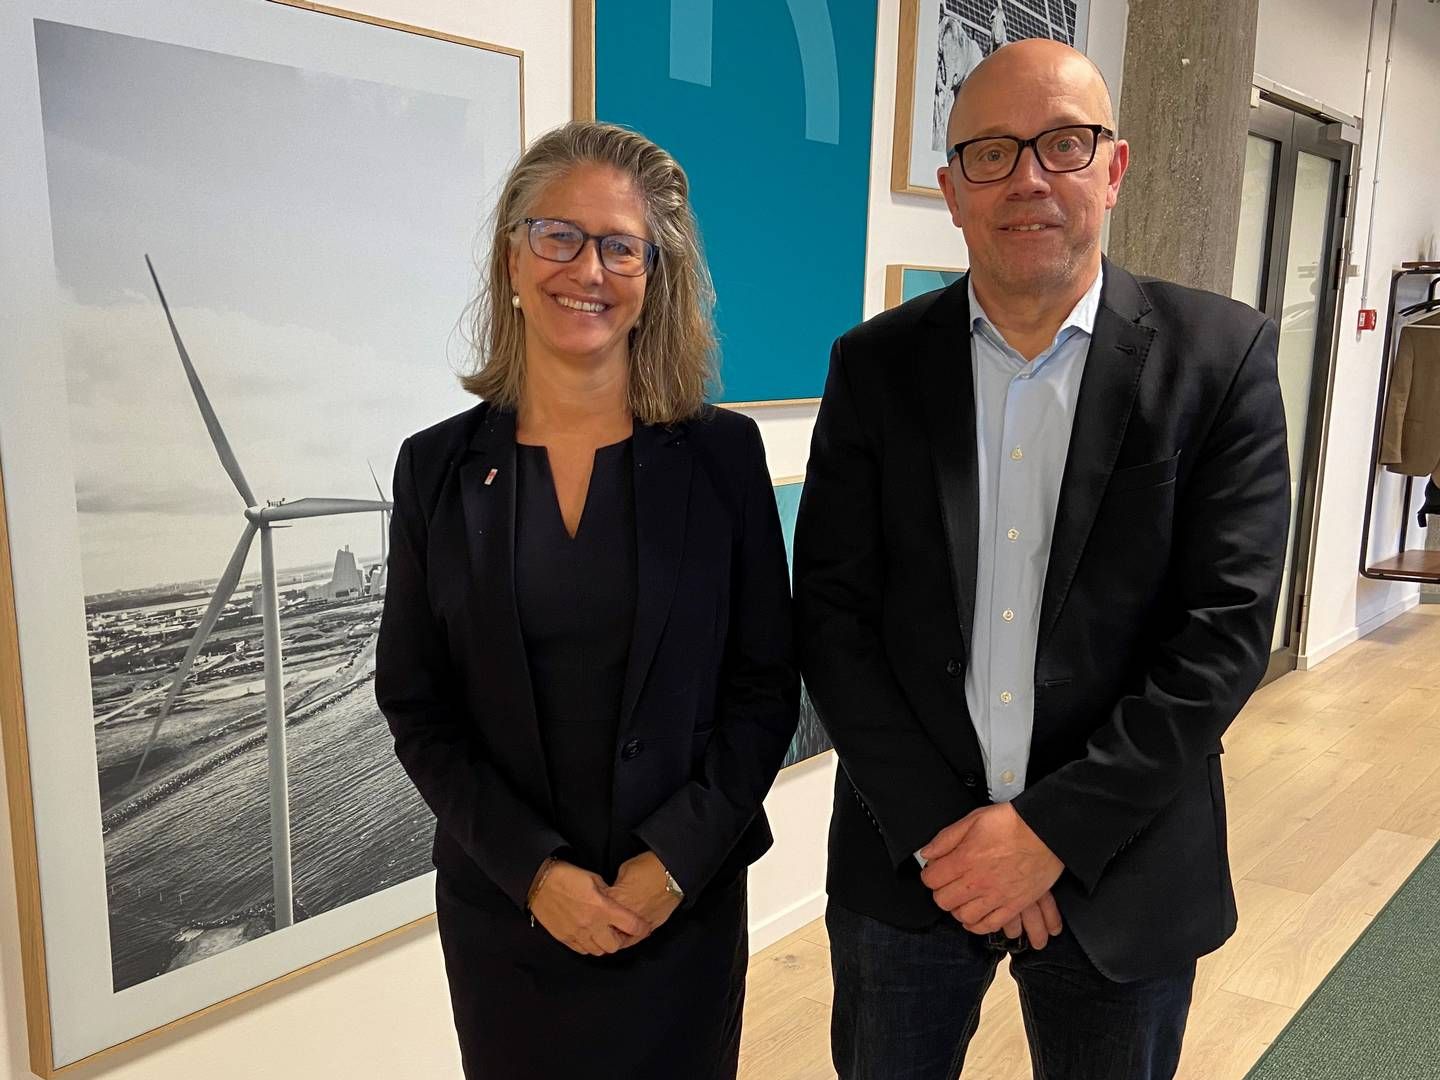 Anette Galskjøt, CEO of Danish Export Association and Jan Hylleberg, Deputy CEO of Green Power Denmark | Photo: Pr Green Power Denmark